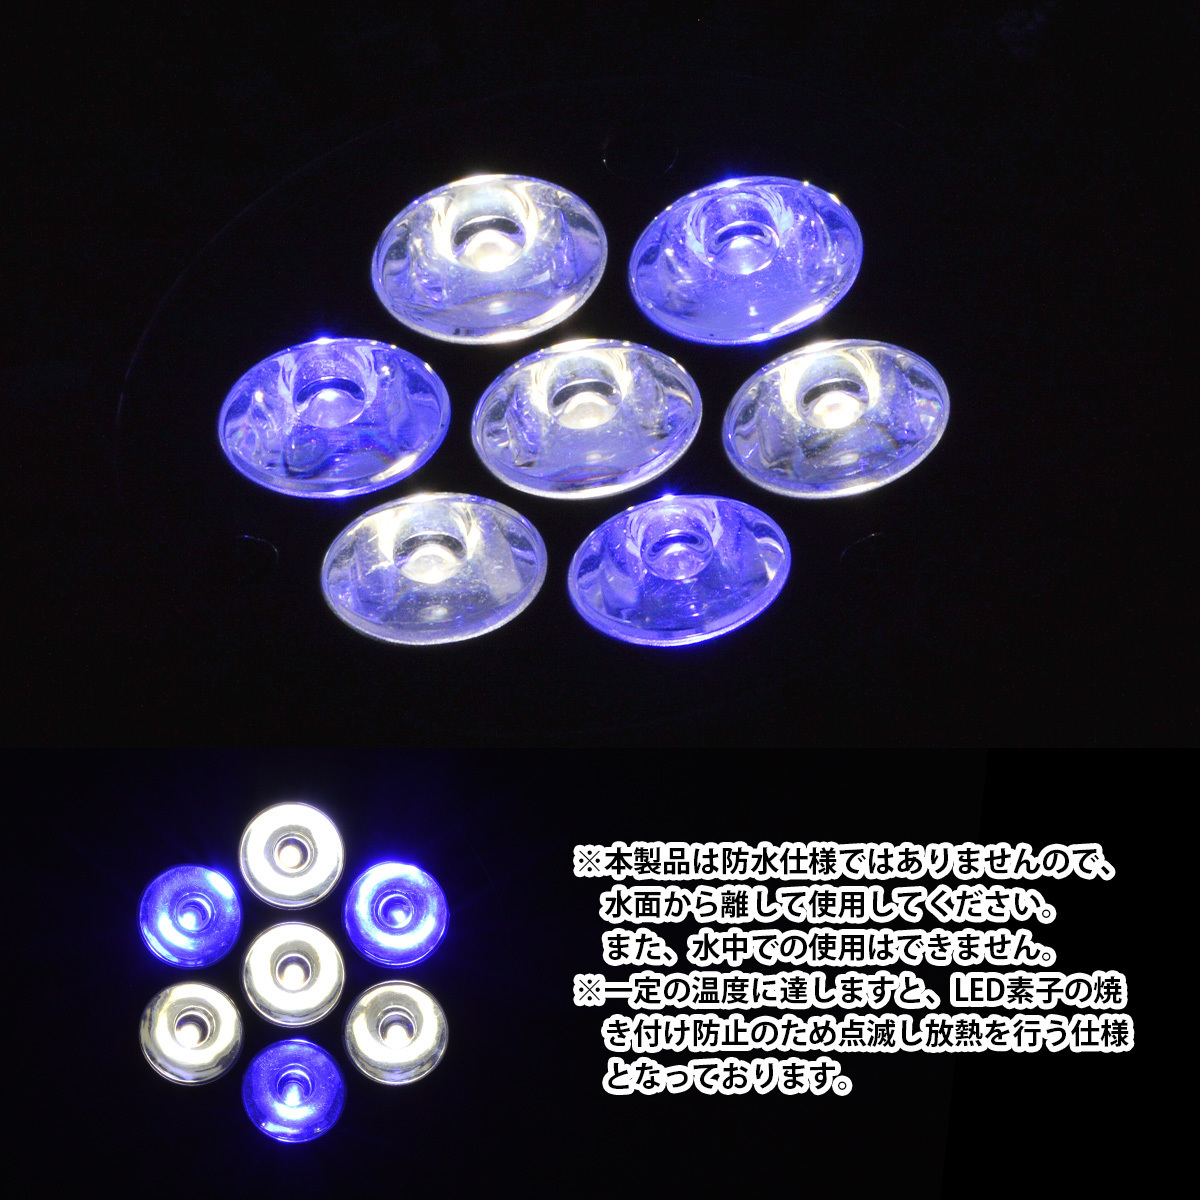 LED 電球 スポットライト 7W 青3白4 水槽 照明 E26 観賞育成用 LEDスポットライト 電気 水草 サンゴ 熱帯魚 観賞魚 植物育成_画像4